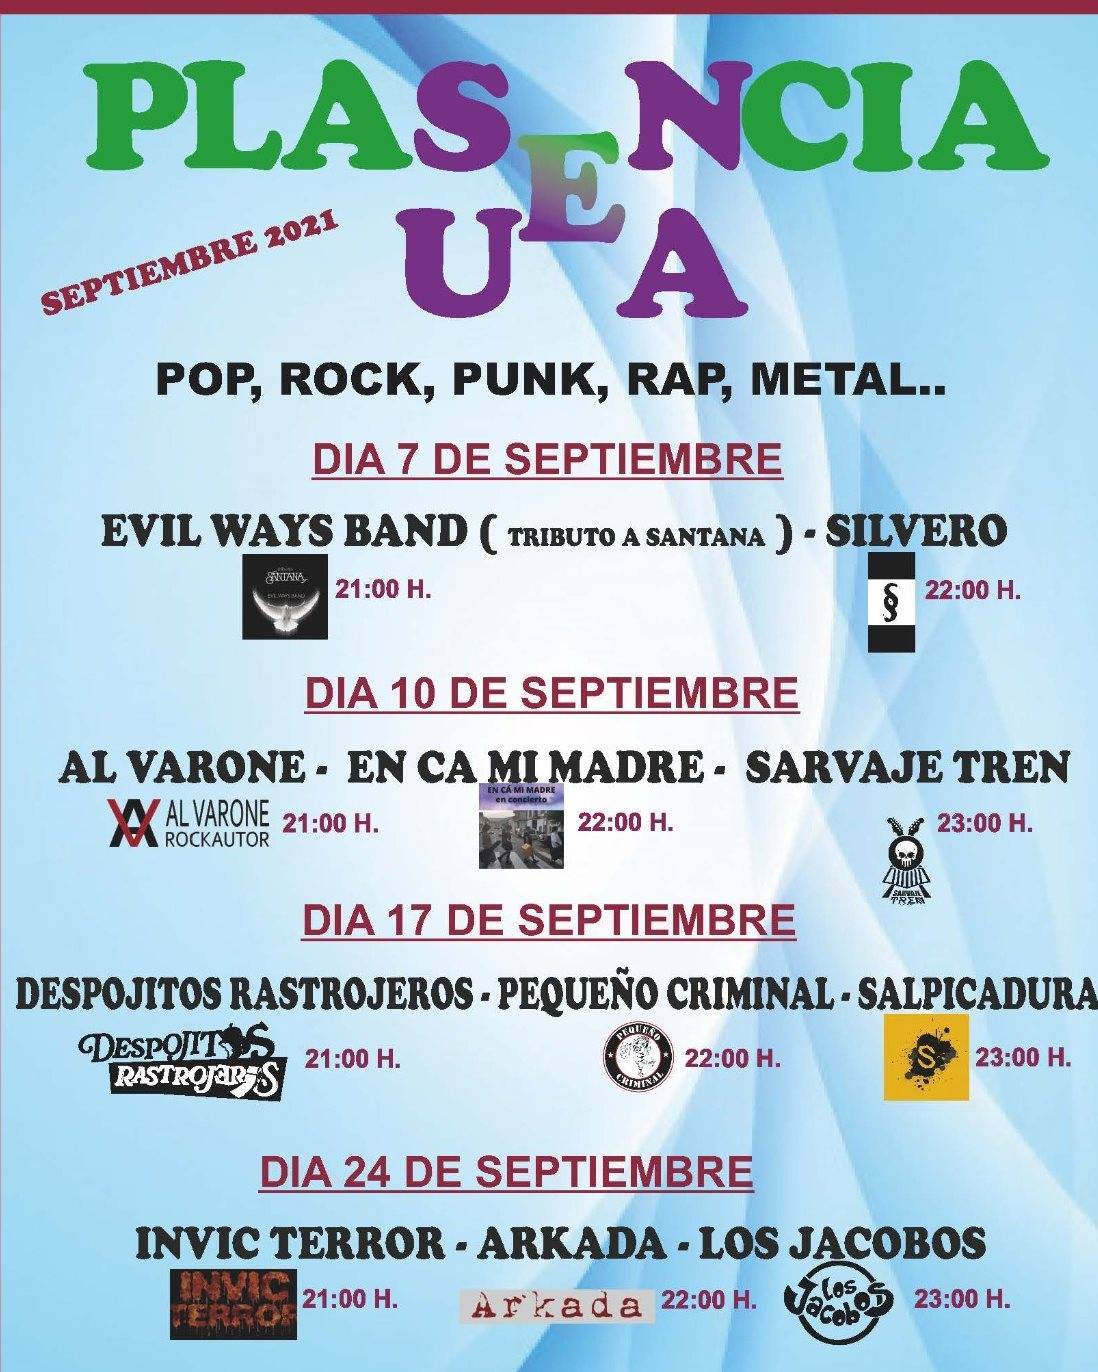 II edición del Festival de Música 'Plasencia Suena' - Plasencia (Cáceres)